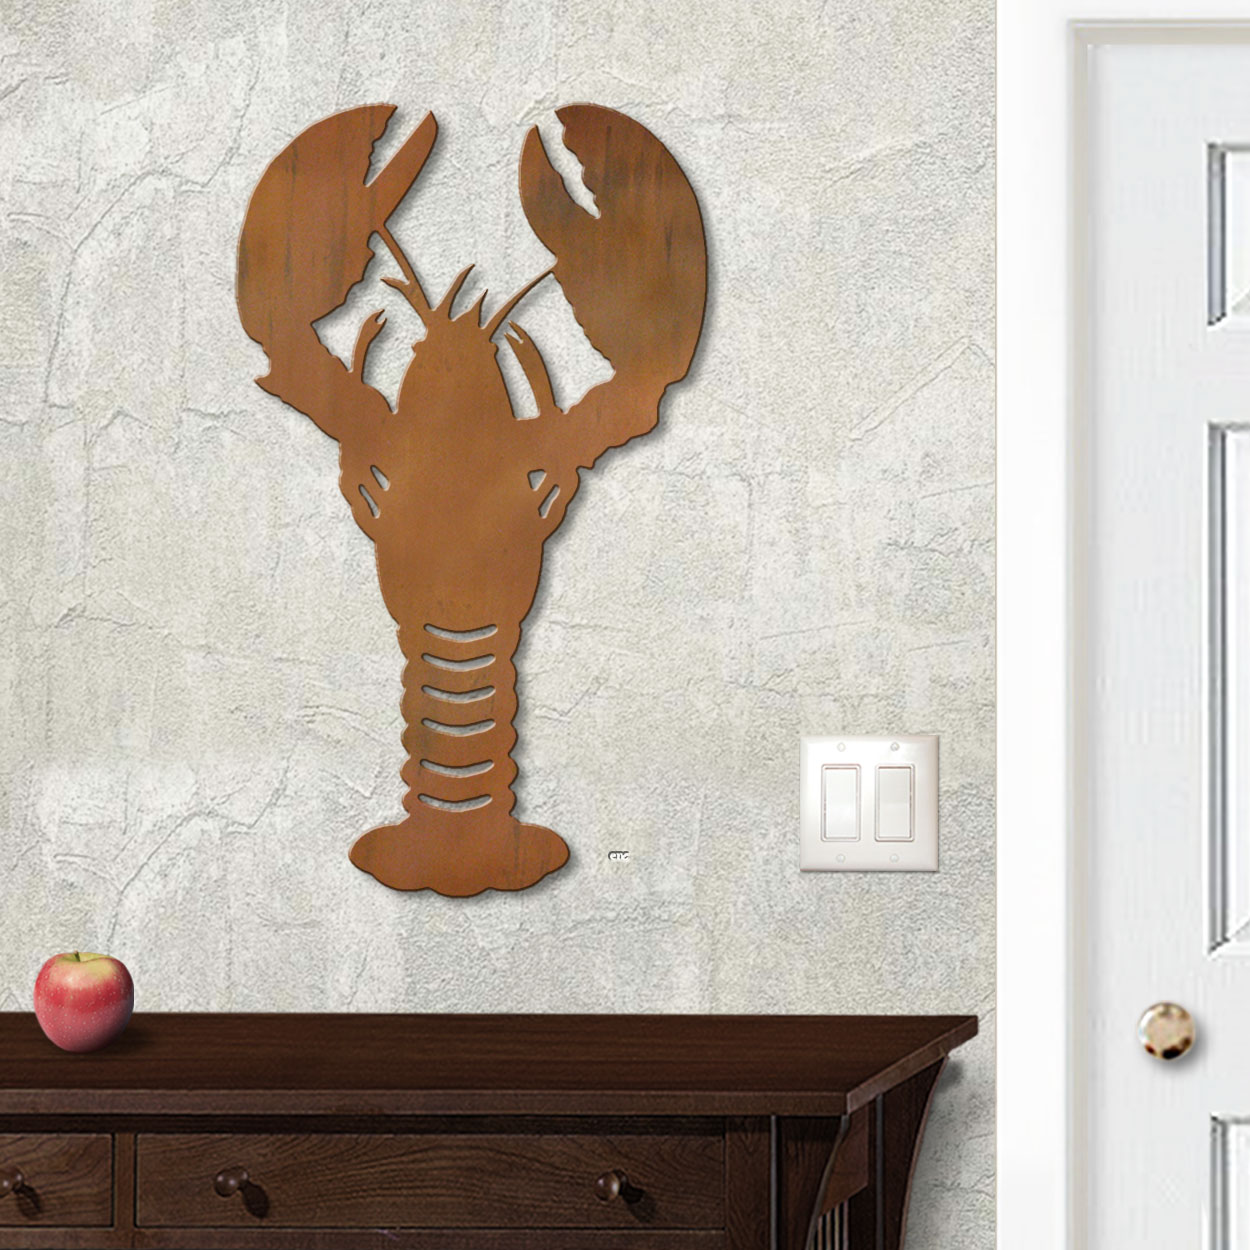 625407r - 18in or 24in Floating Metal Wall Art - Lobster - Rust Patina